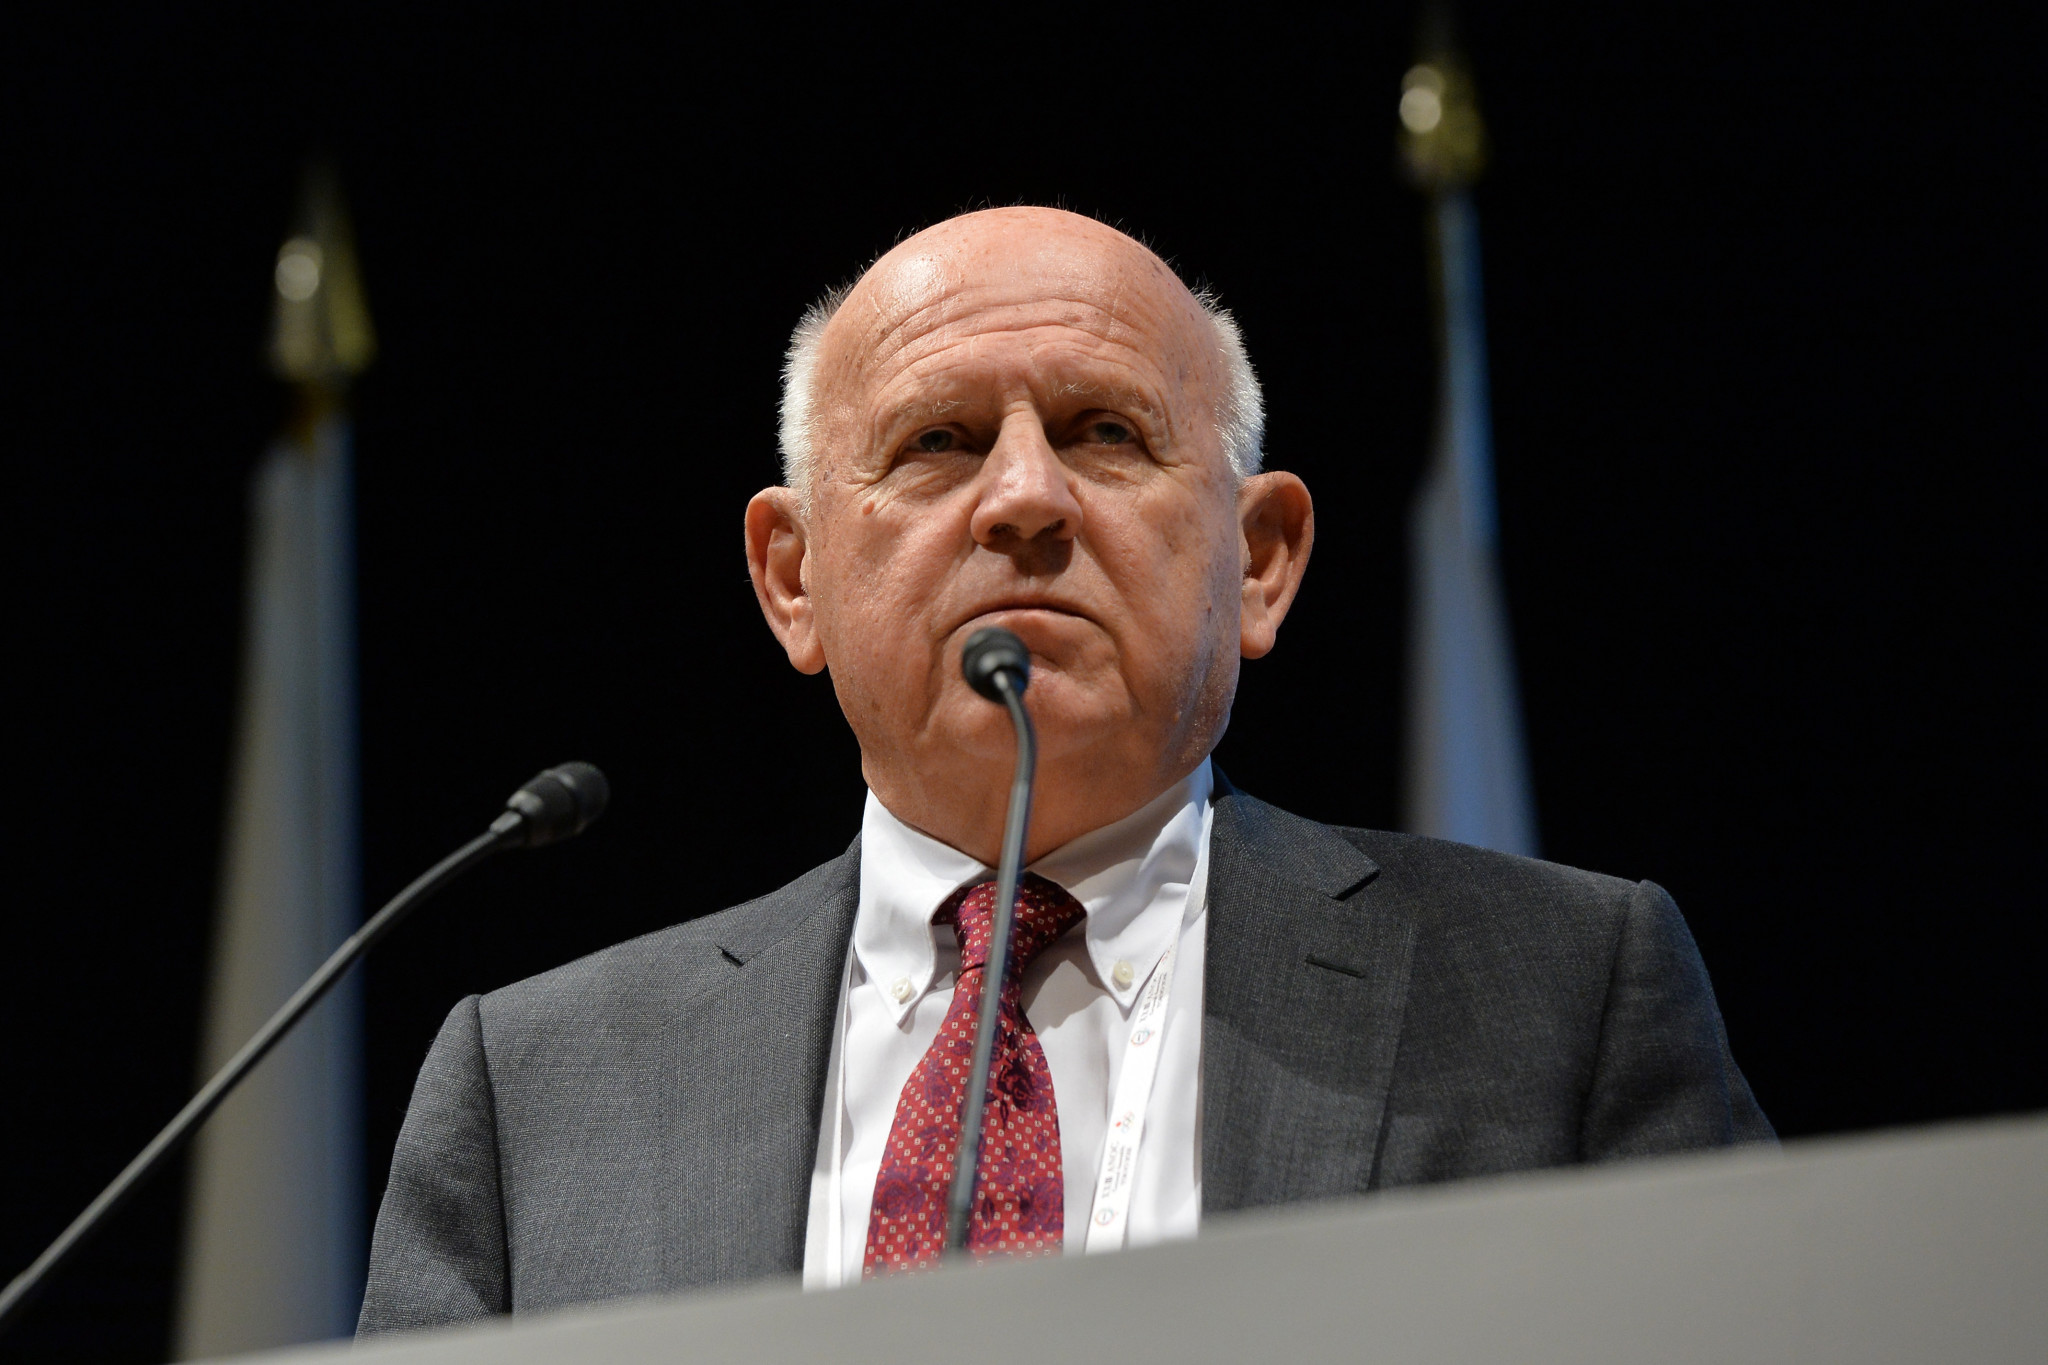 Janez Kocijančič, the EOC President, declared himself 